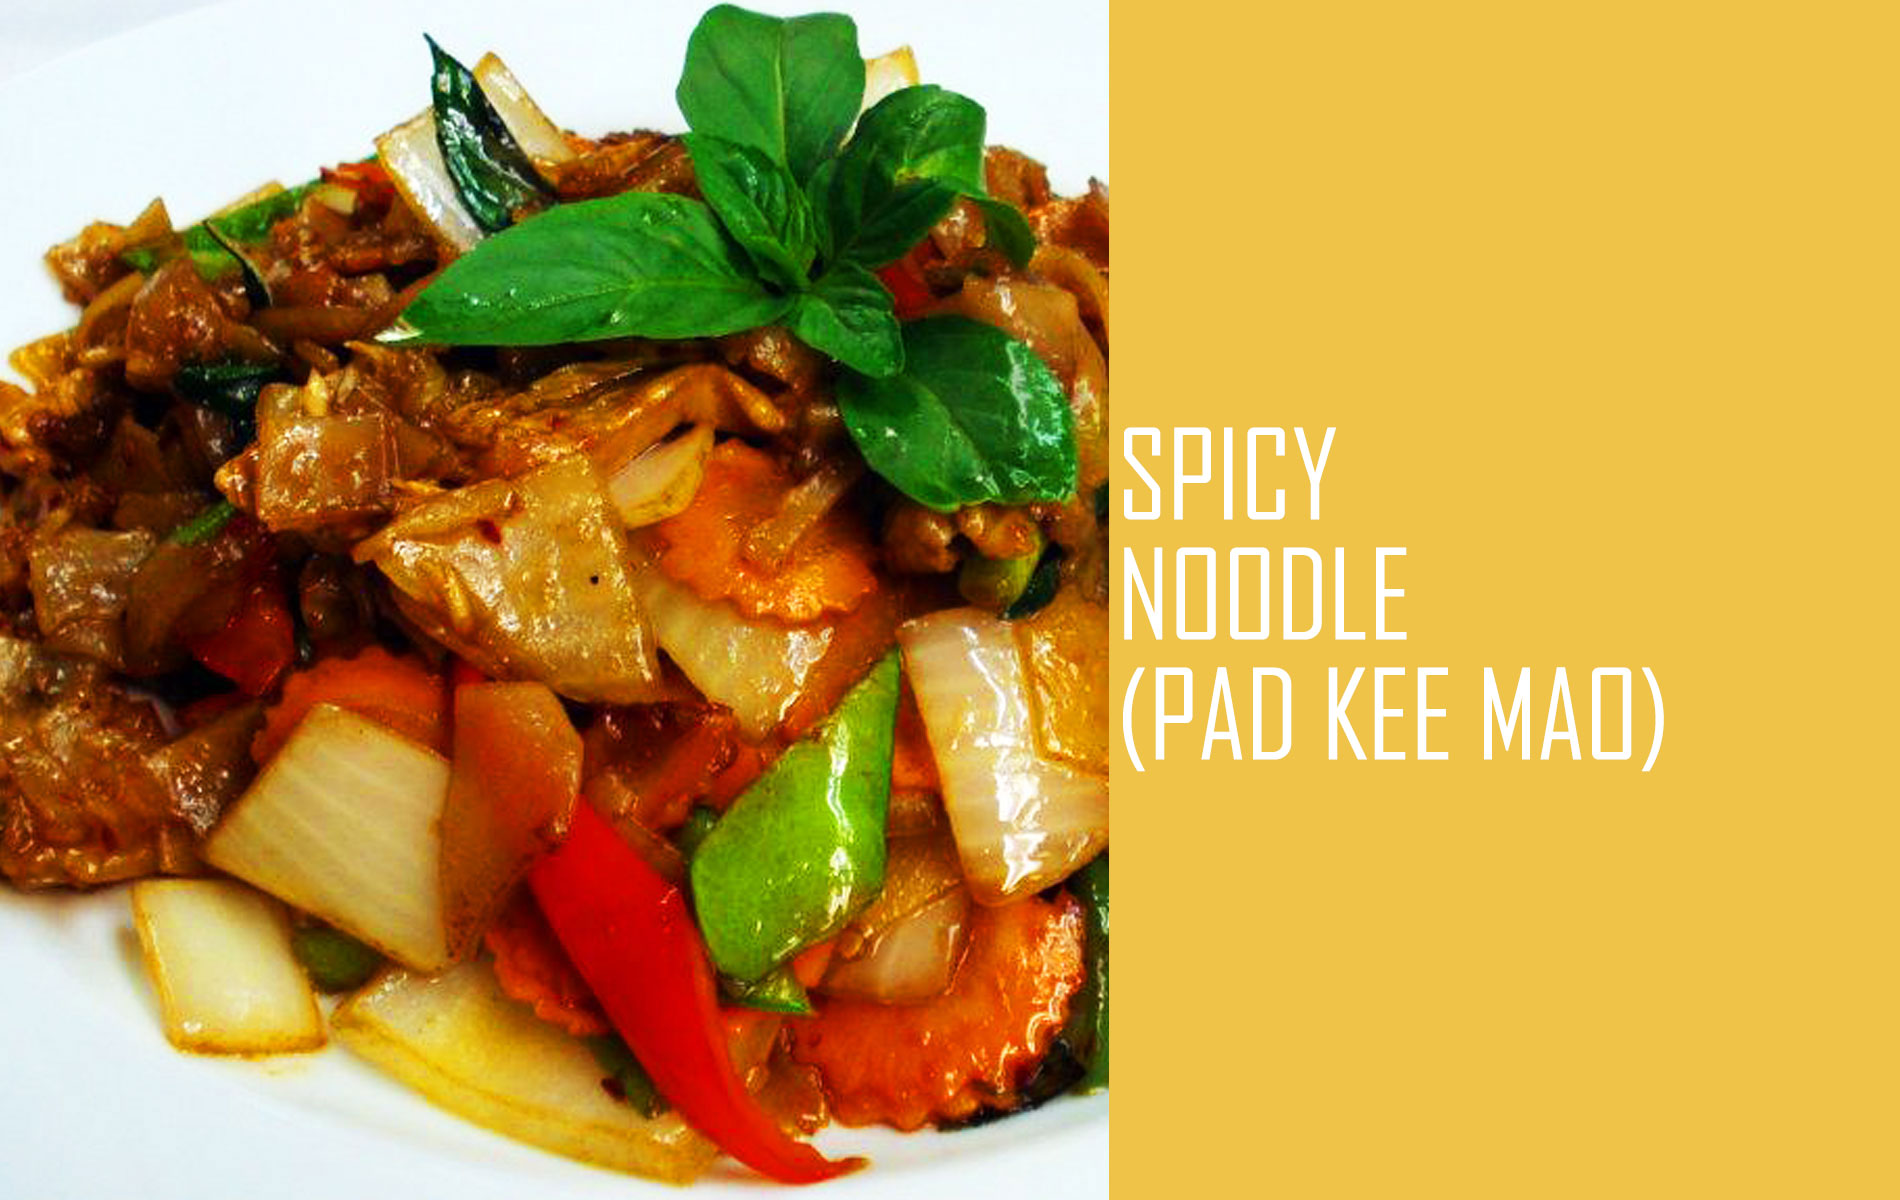 Spicy Noodle (Pad Kee Mao)